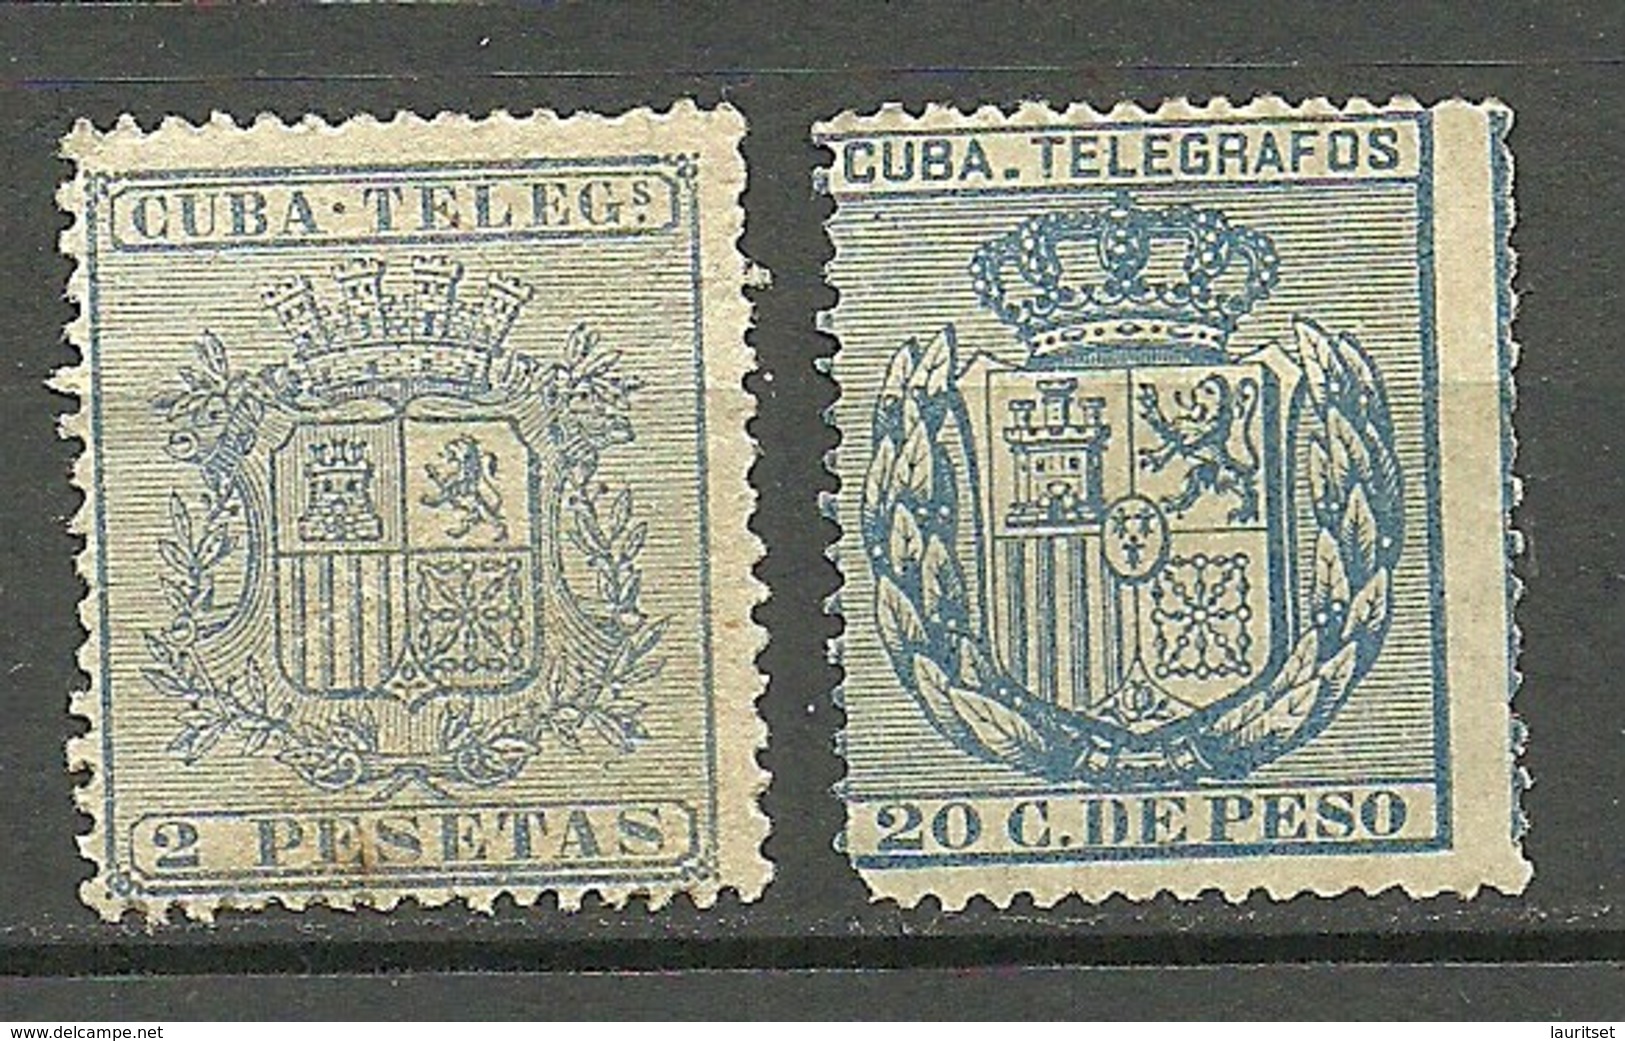 KUBA Cuba Old Telegraph Stamps (*) - Telegrafo